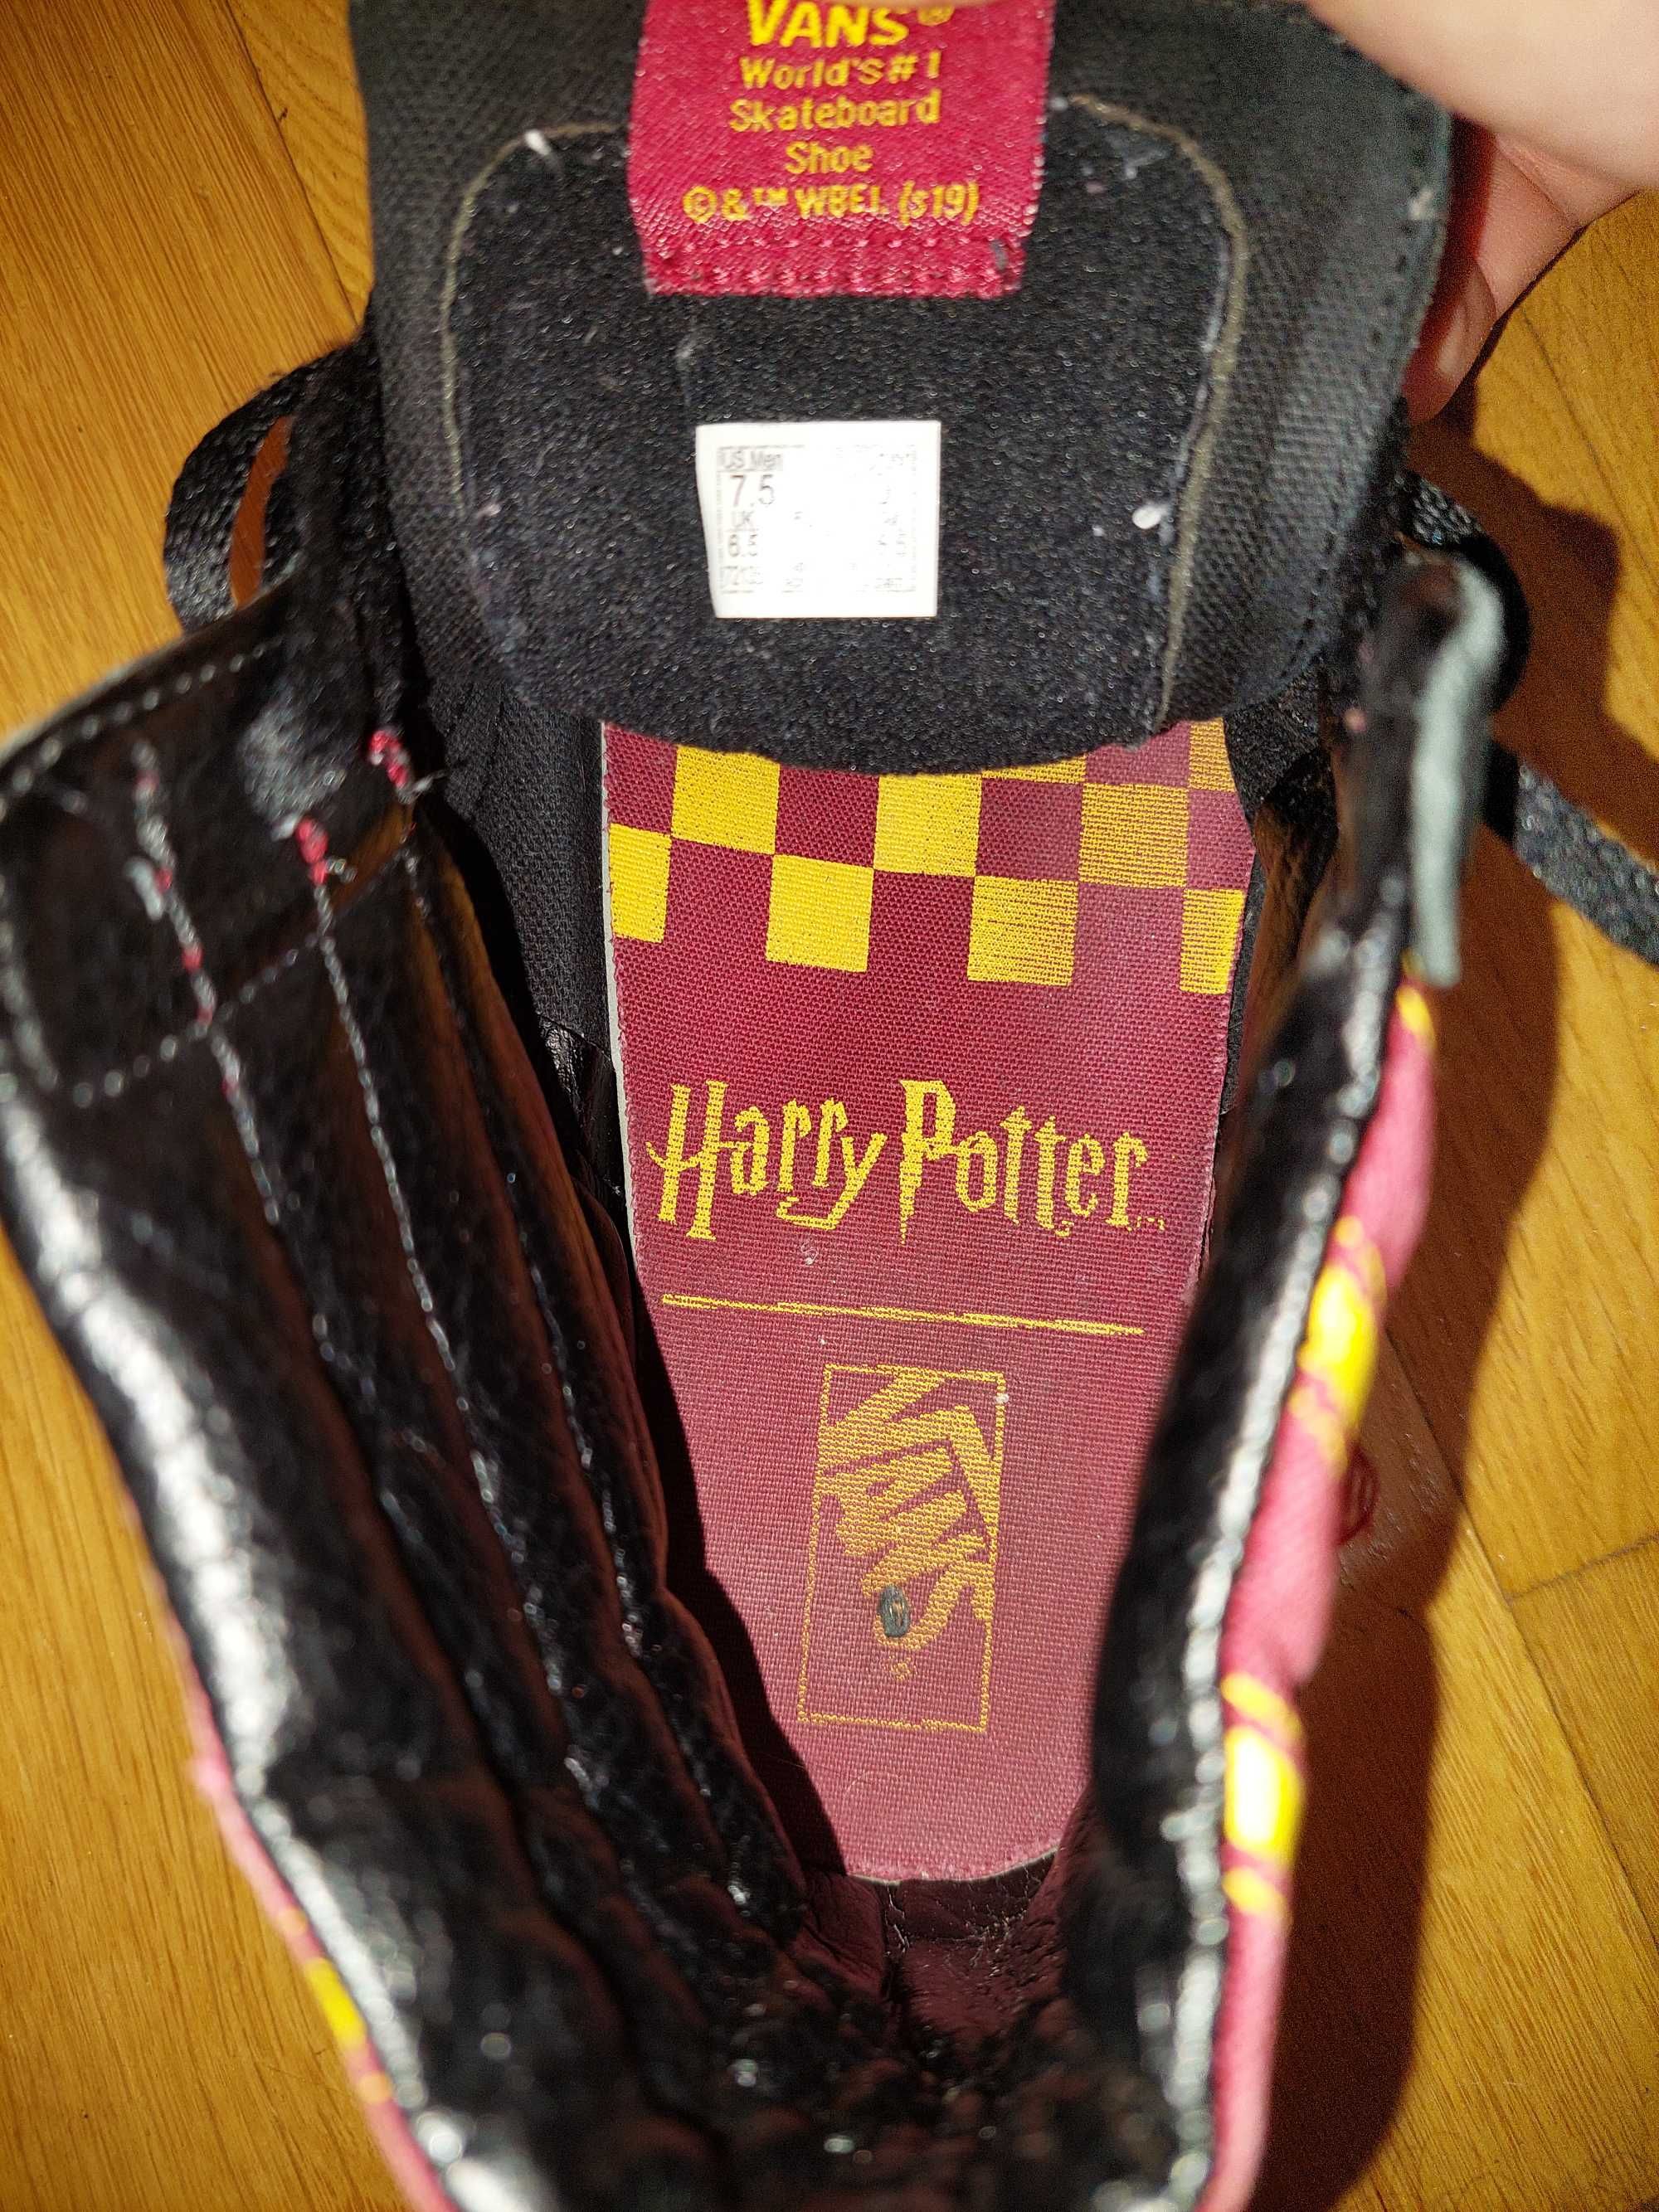 Adidasi vans Harry Potter